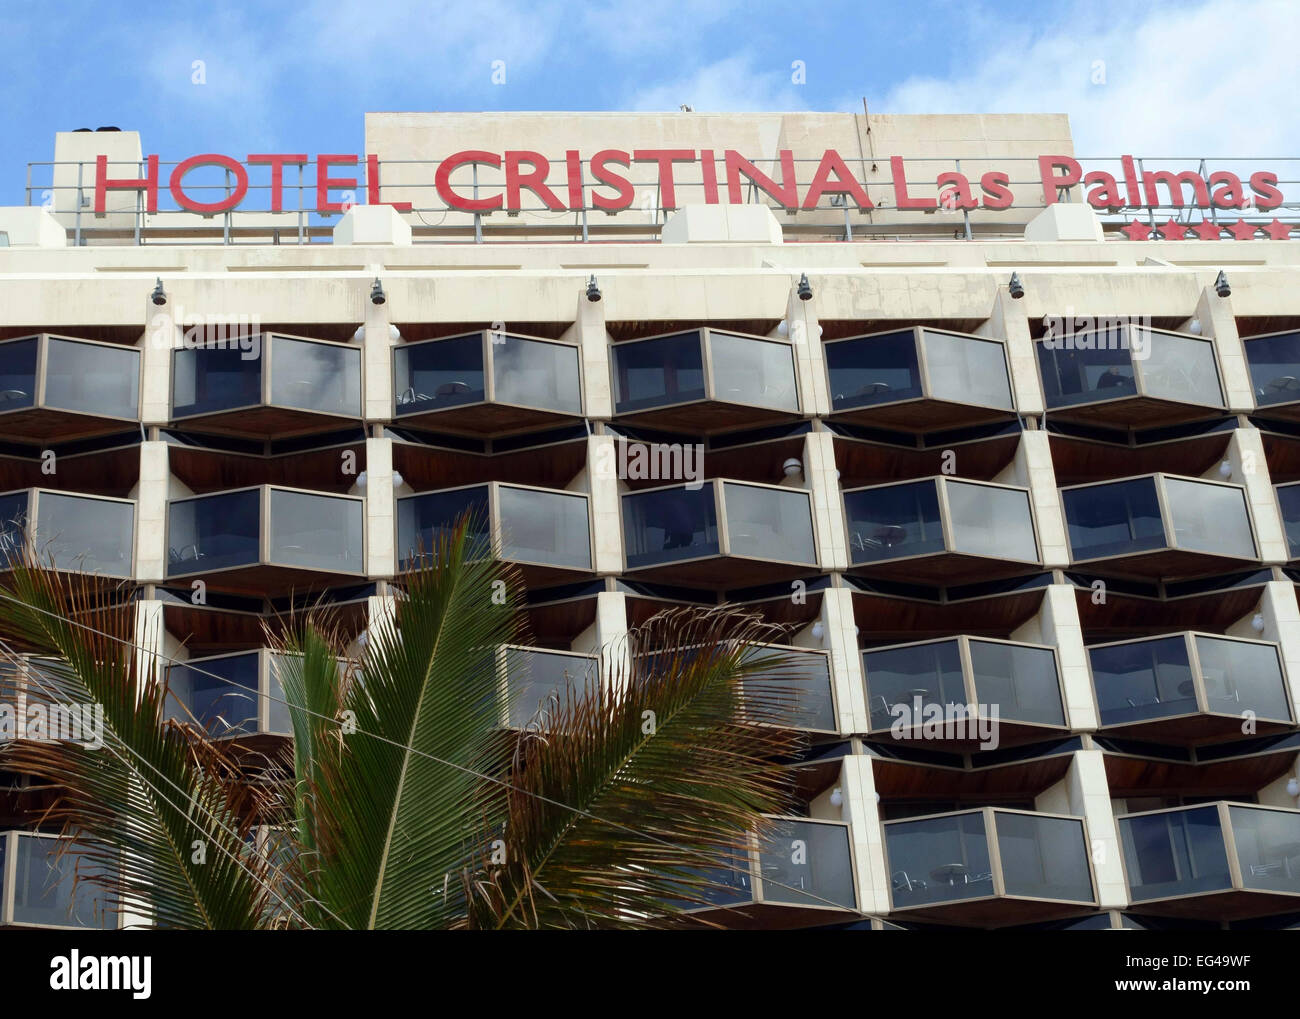 Hotel cristina las palmas gran hi-res stock photography and images - Alamy